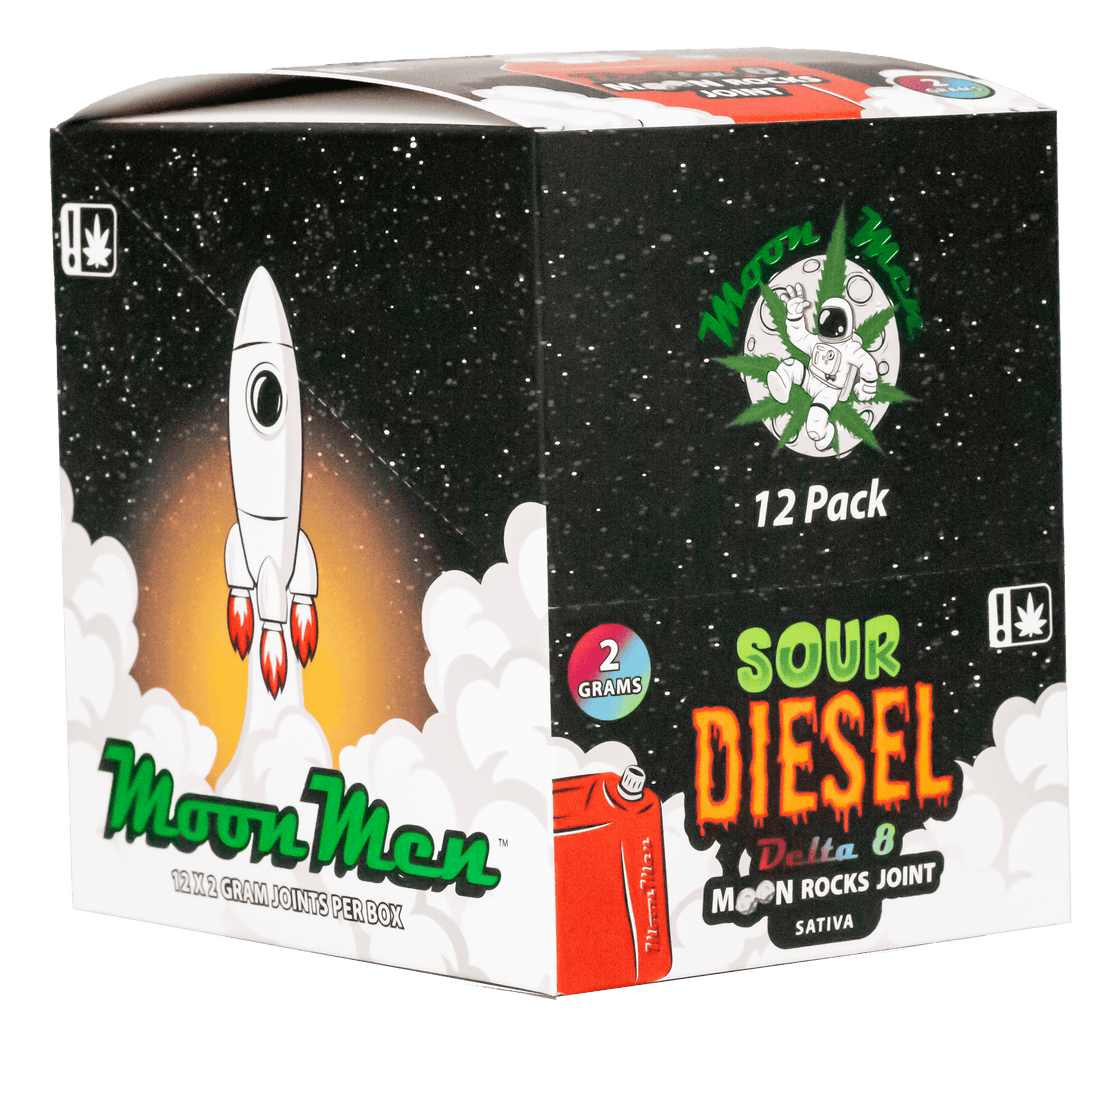 Delta 8 Moon Rock Joint Sour Diesel Sativa (2g) | Moon Men